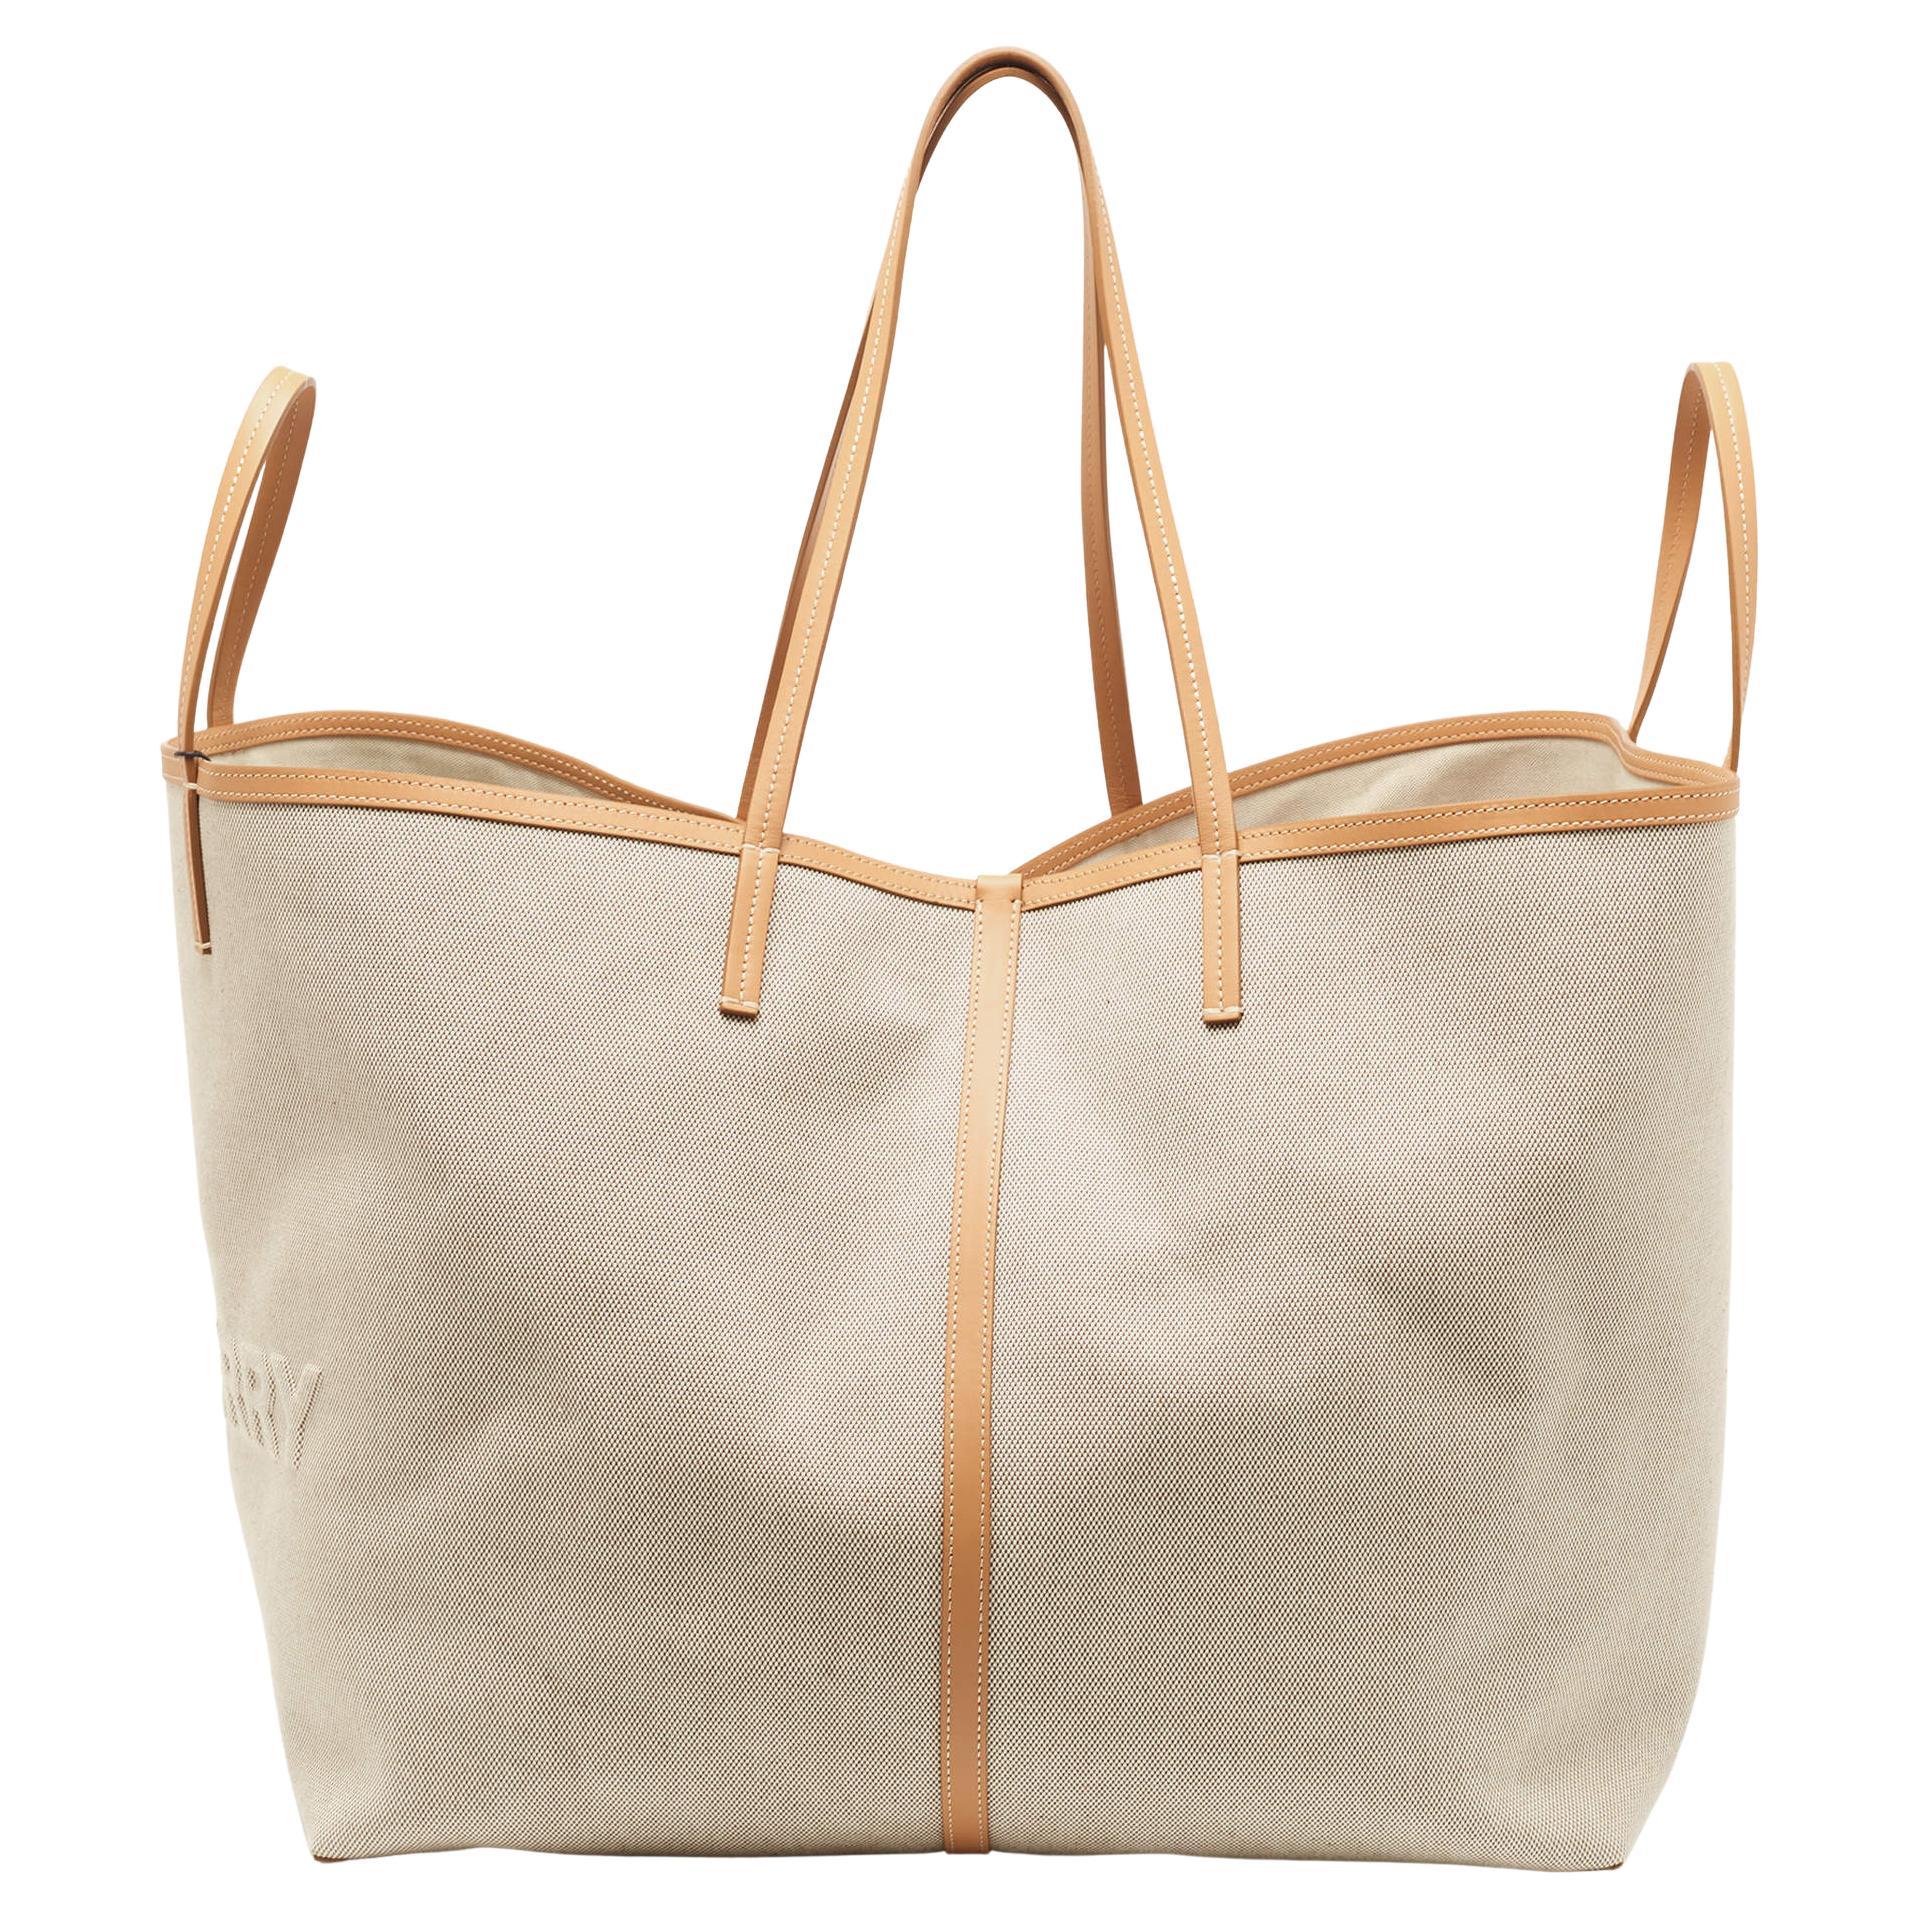 Prada's Multi-Pochette is the Newest In Demand Revival Bag